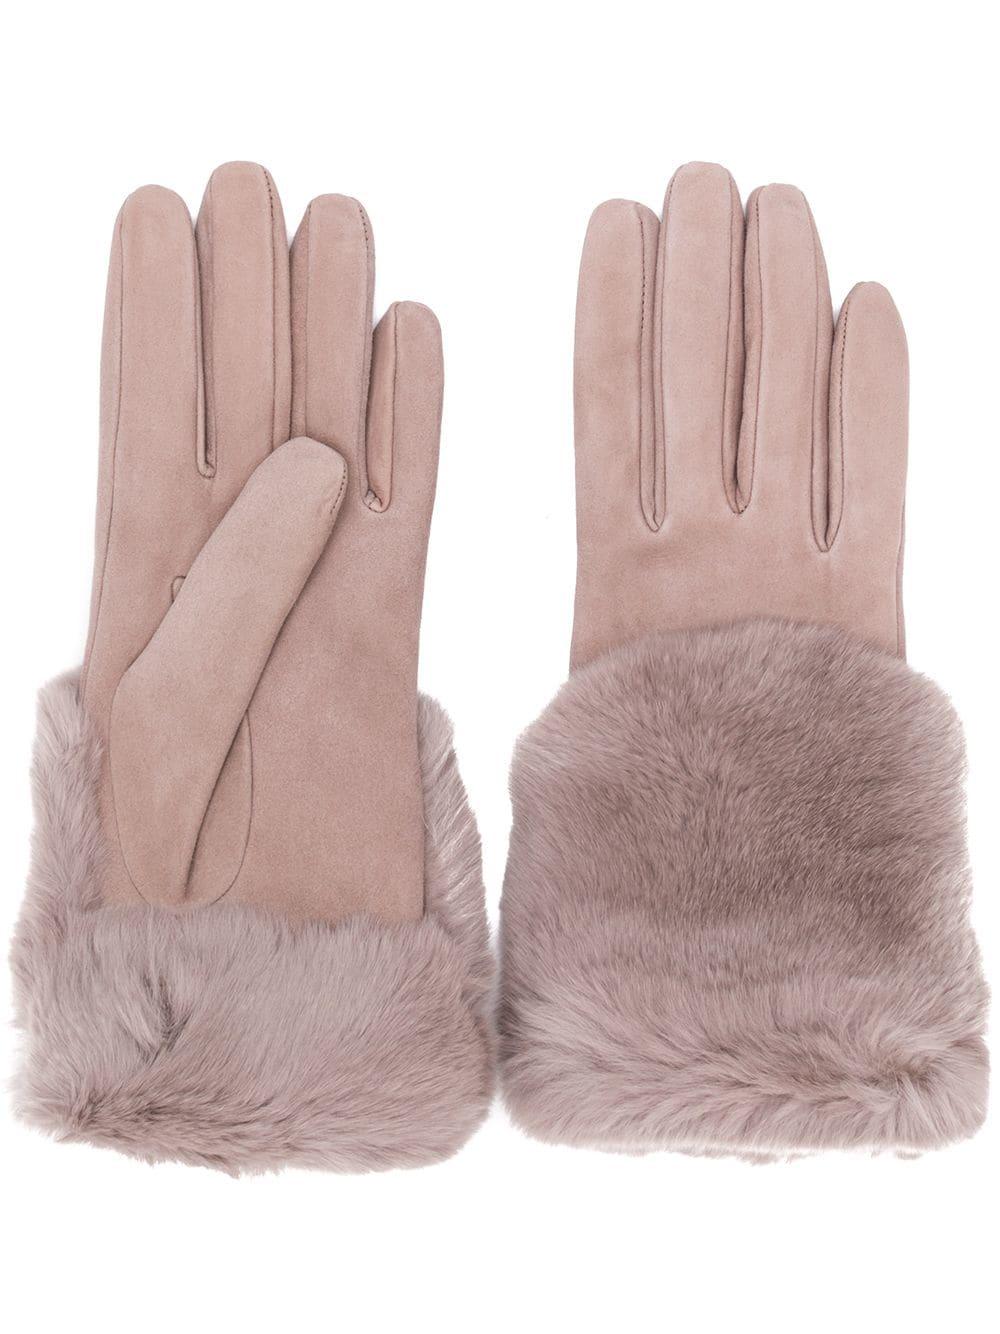 stylish winter gloves